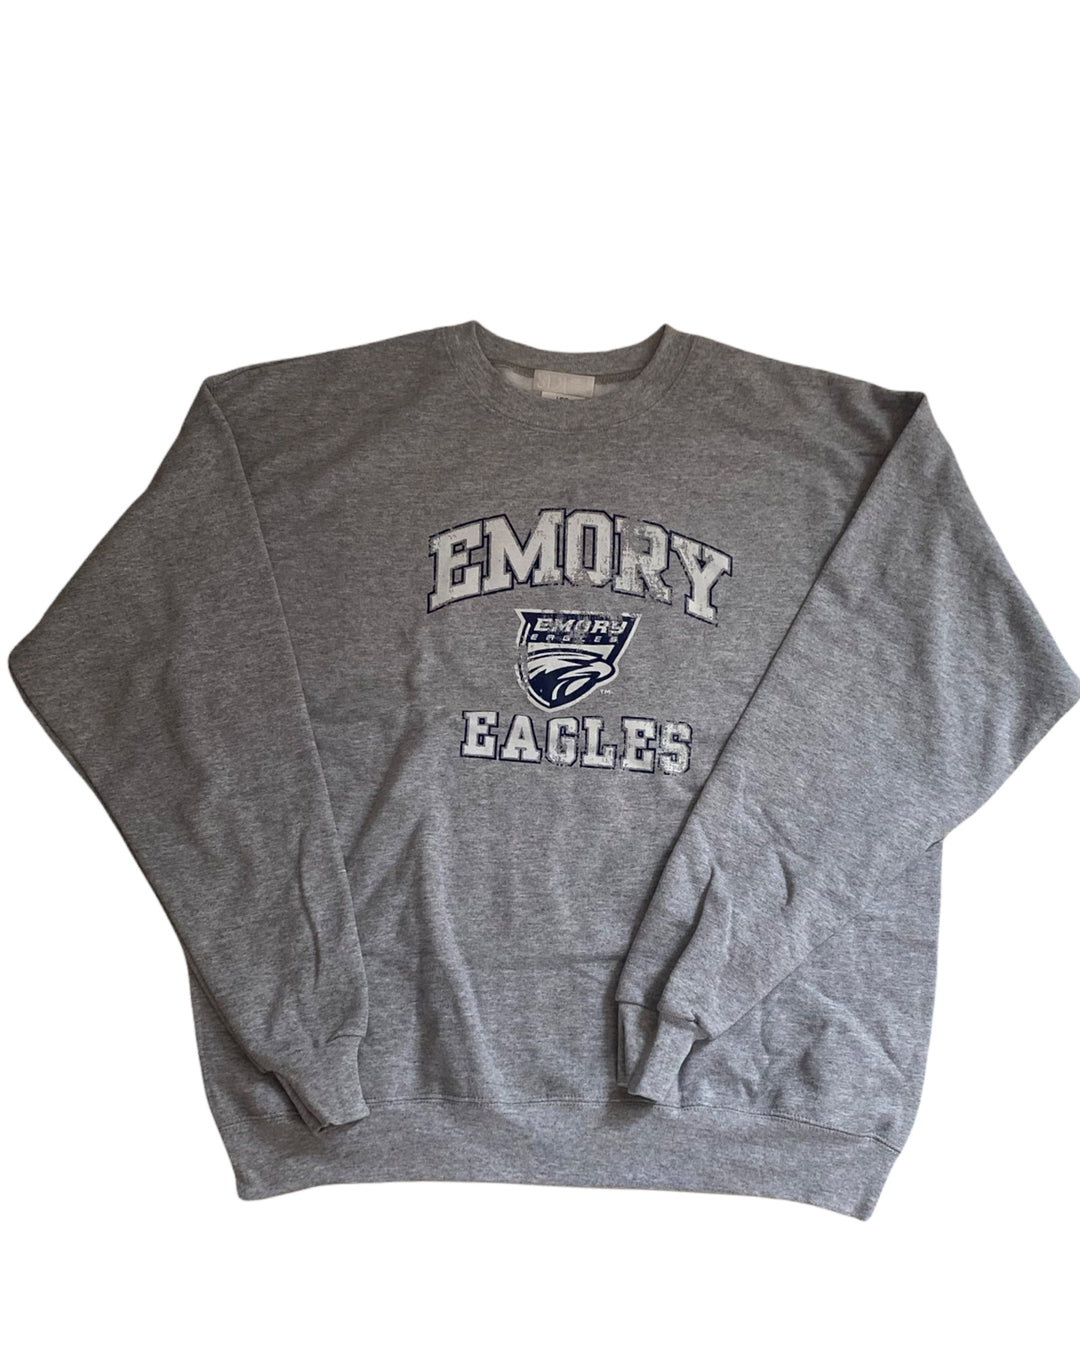 Emory Vintage Sweatshirt